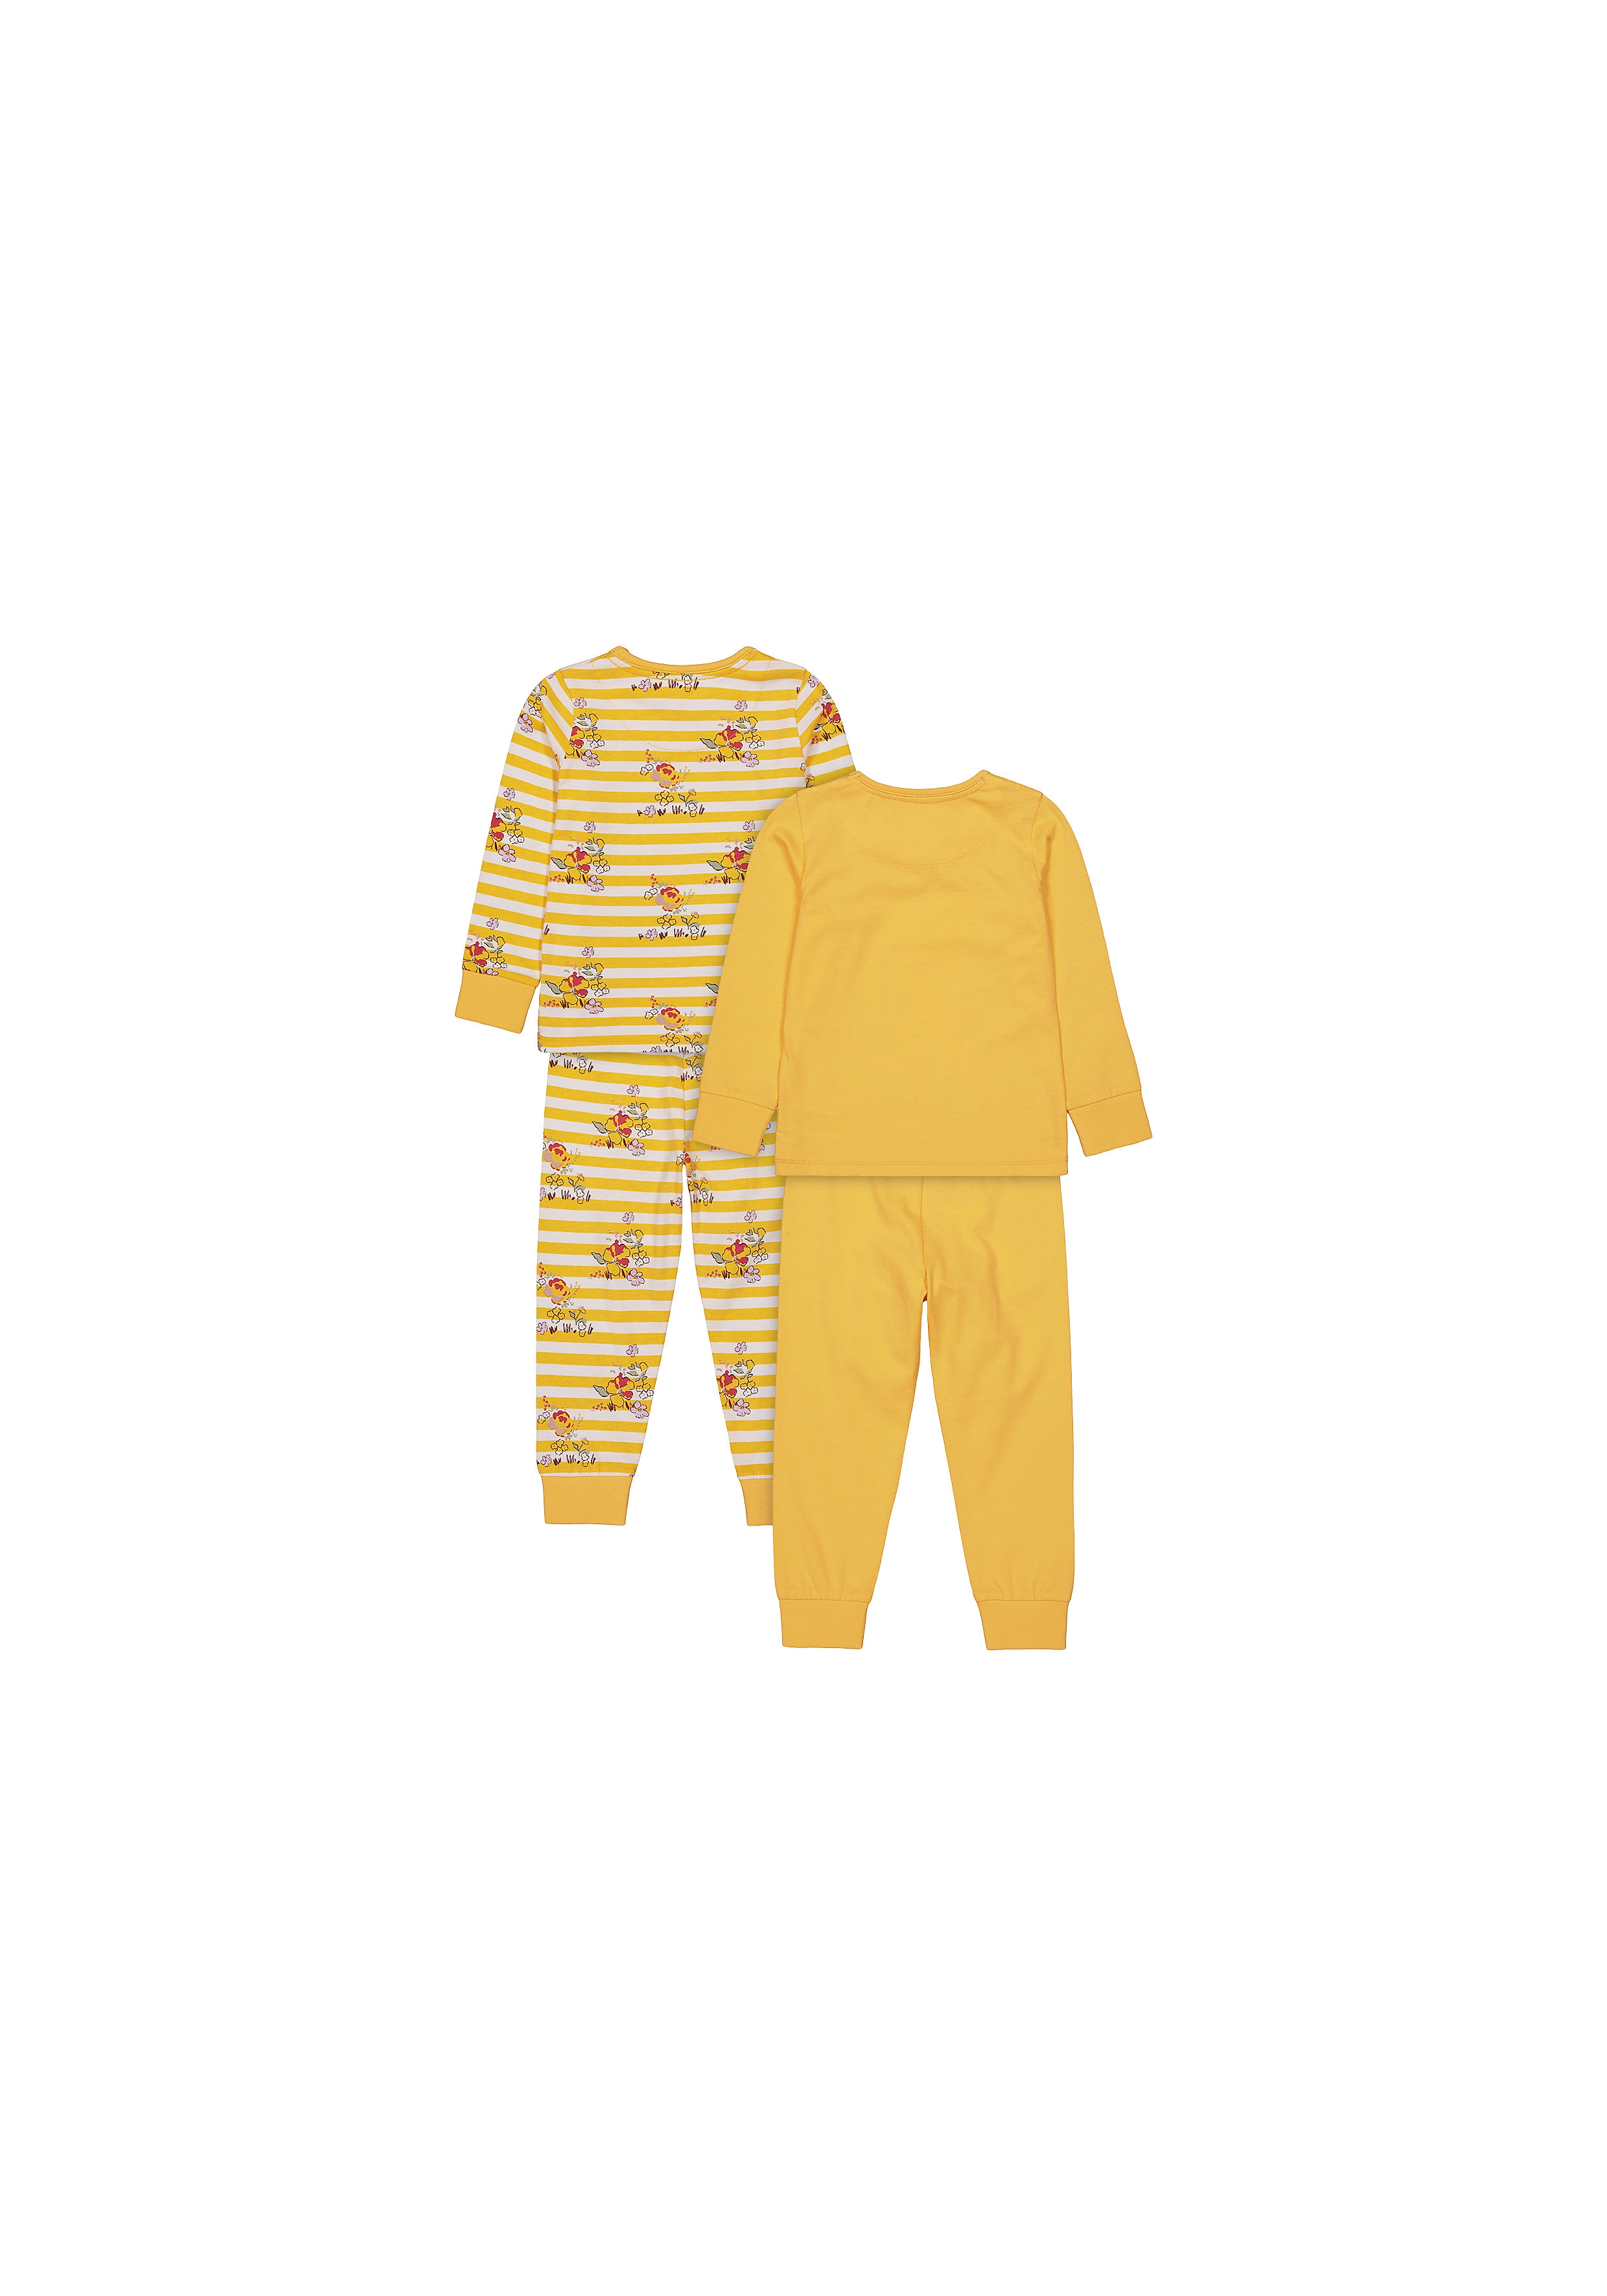 Girls Full Sleeves Pyjama Sets - Pack Of 2 - Mustard